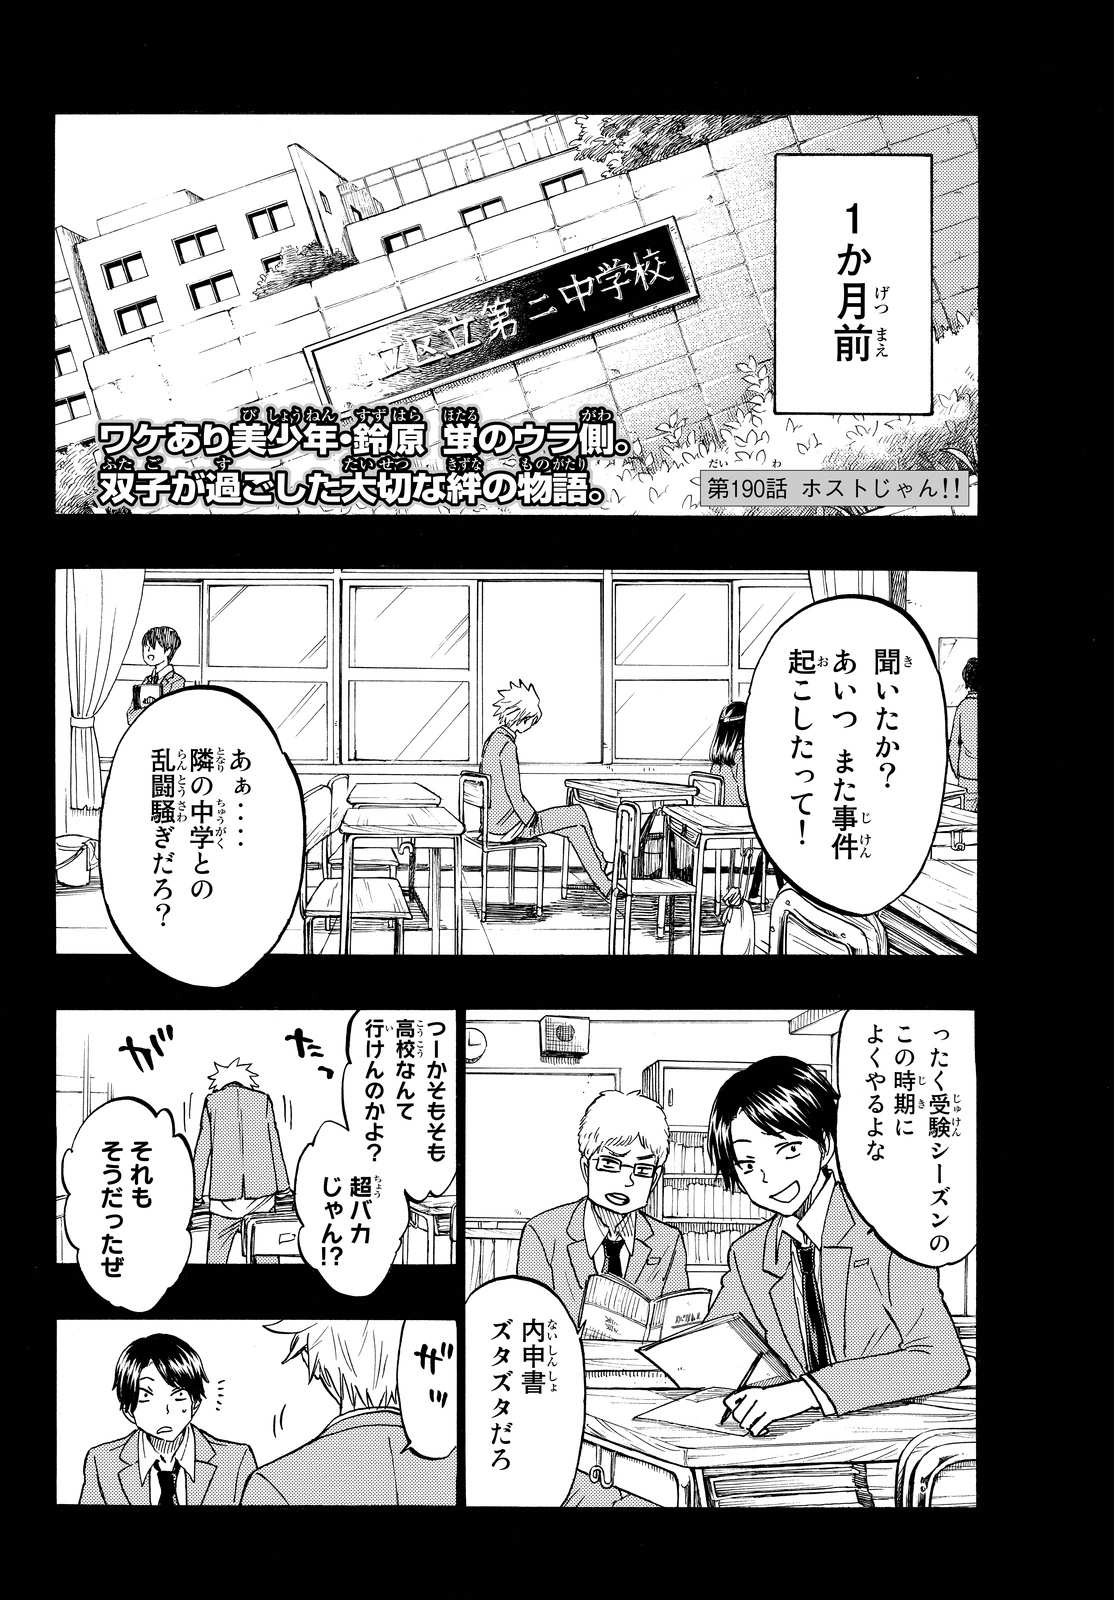 Yamada-kun to 7-nin no Majo - Chapter 190 - Page 2